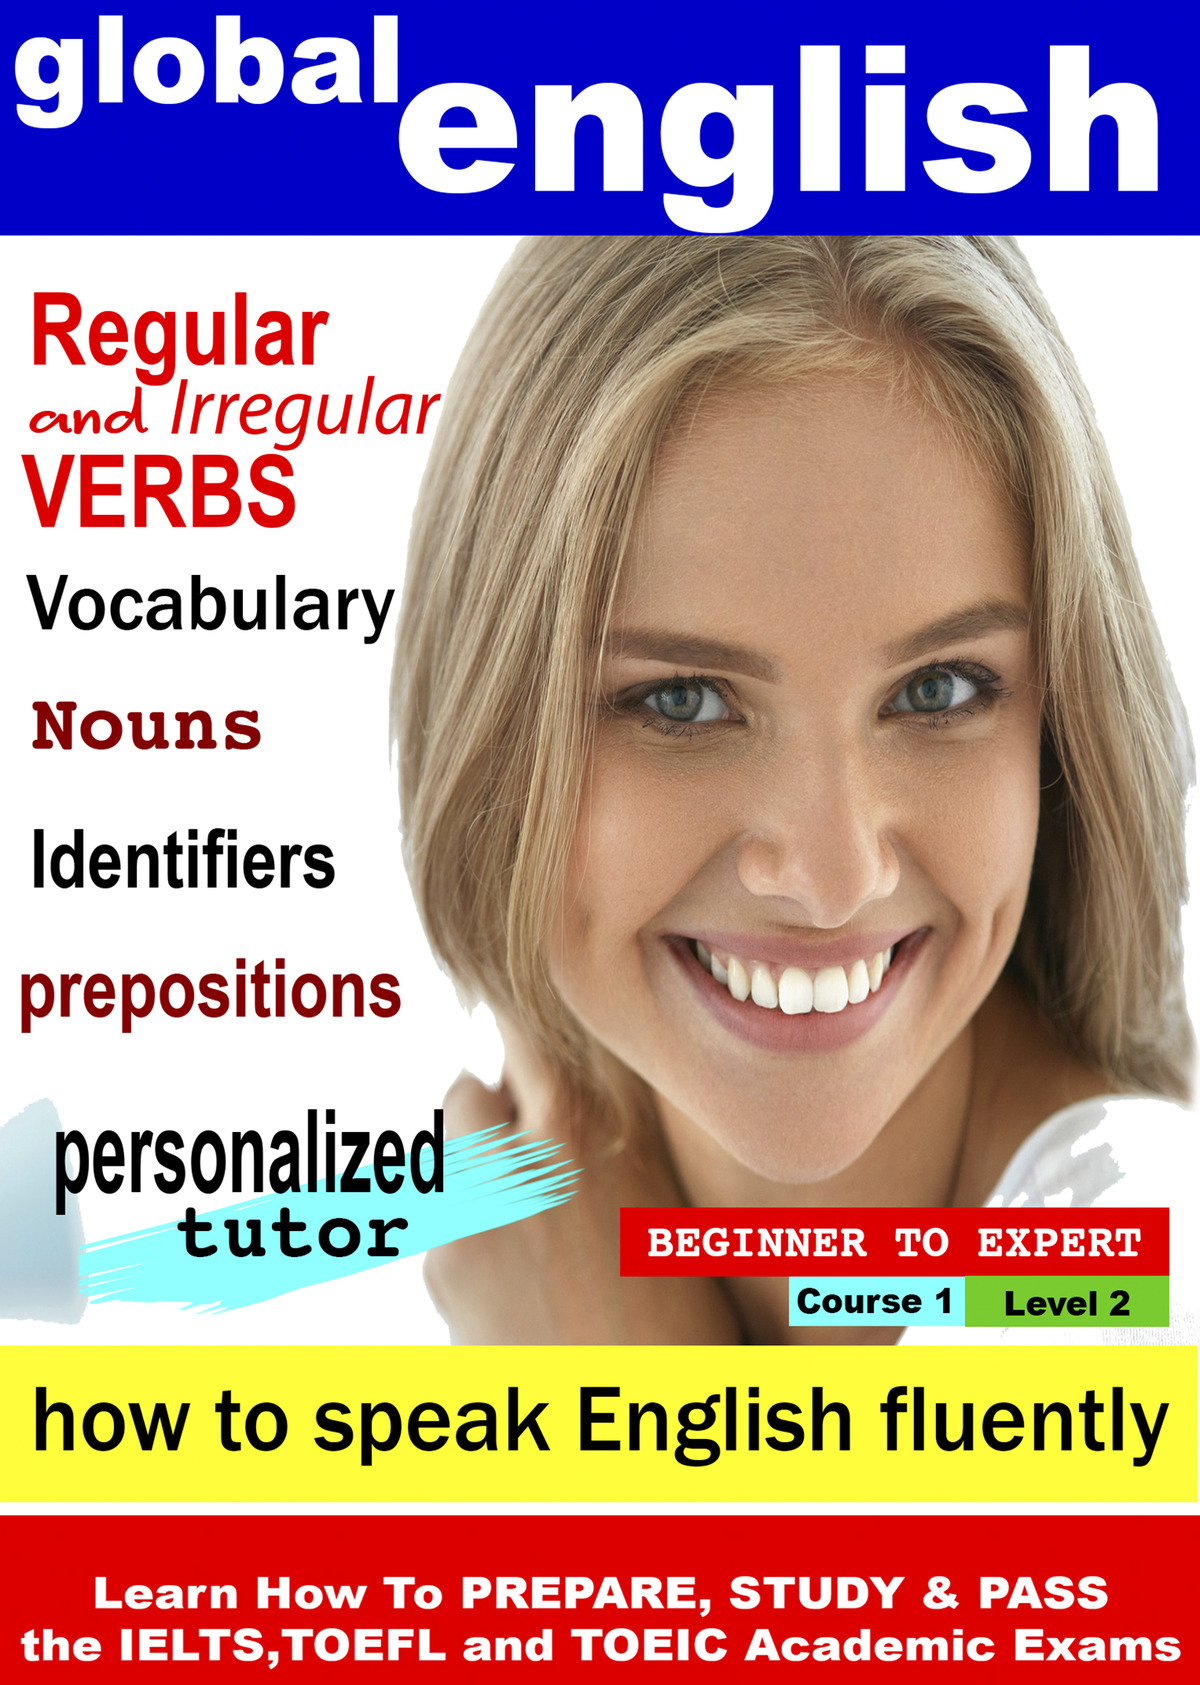 K7002 - Vocabulary, Nouns, Regular & Irregular Verbs, Identifiers, Prepositions (Lesson 2)